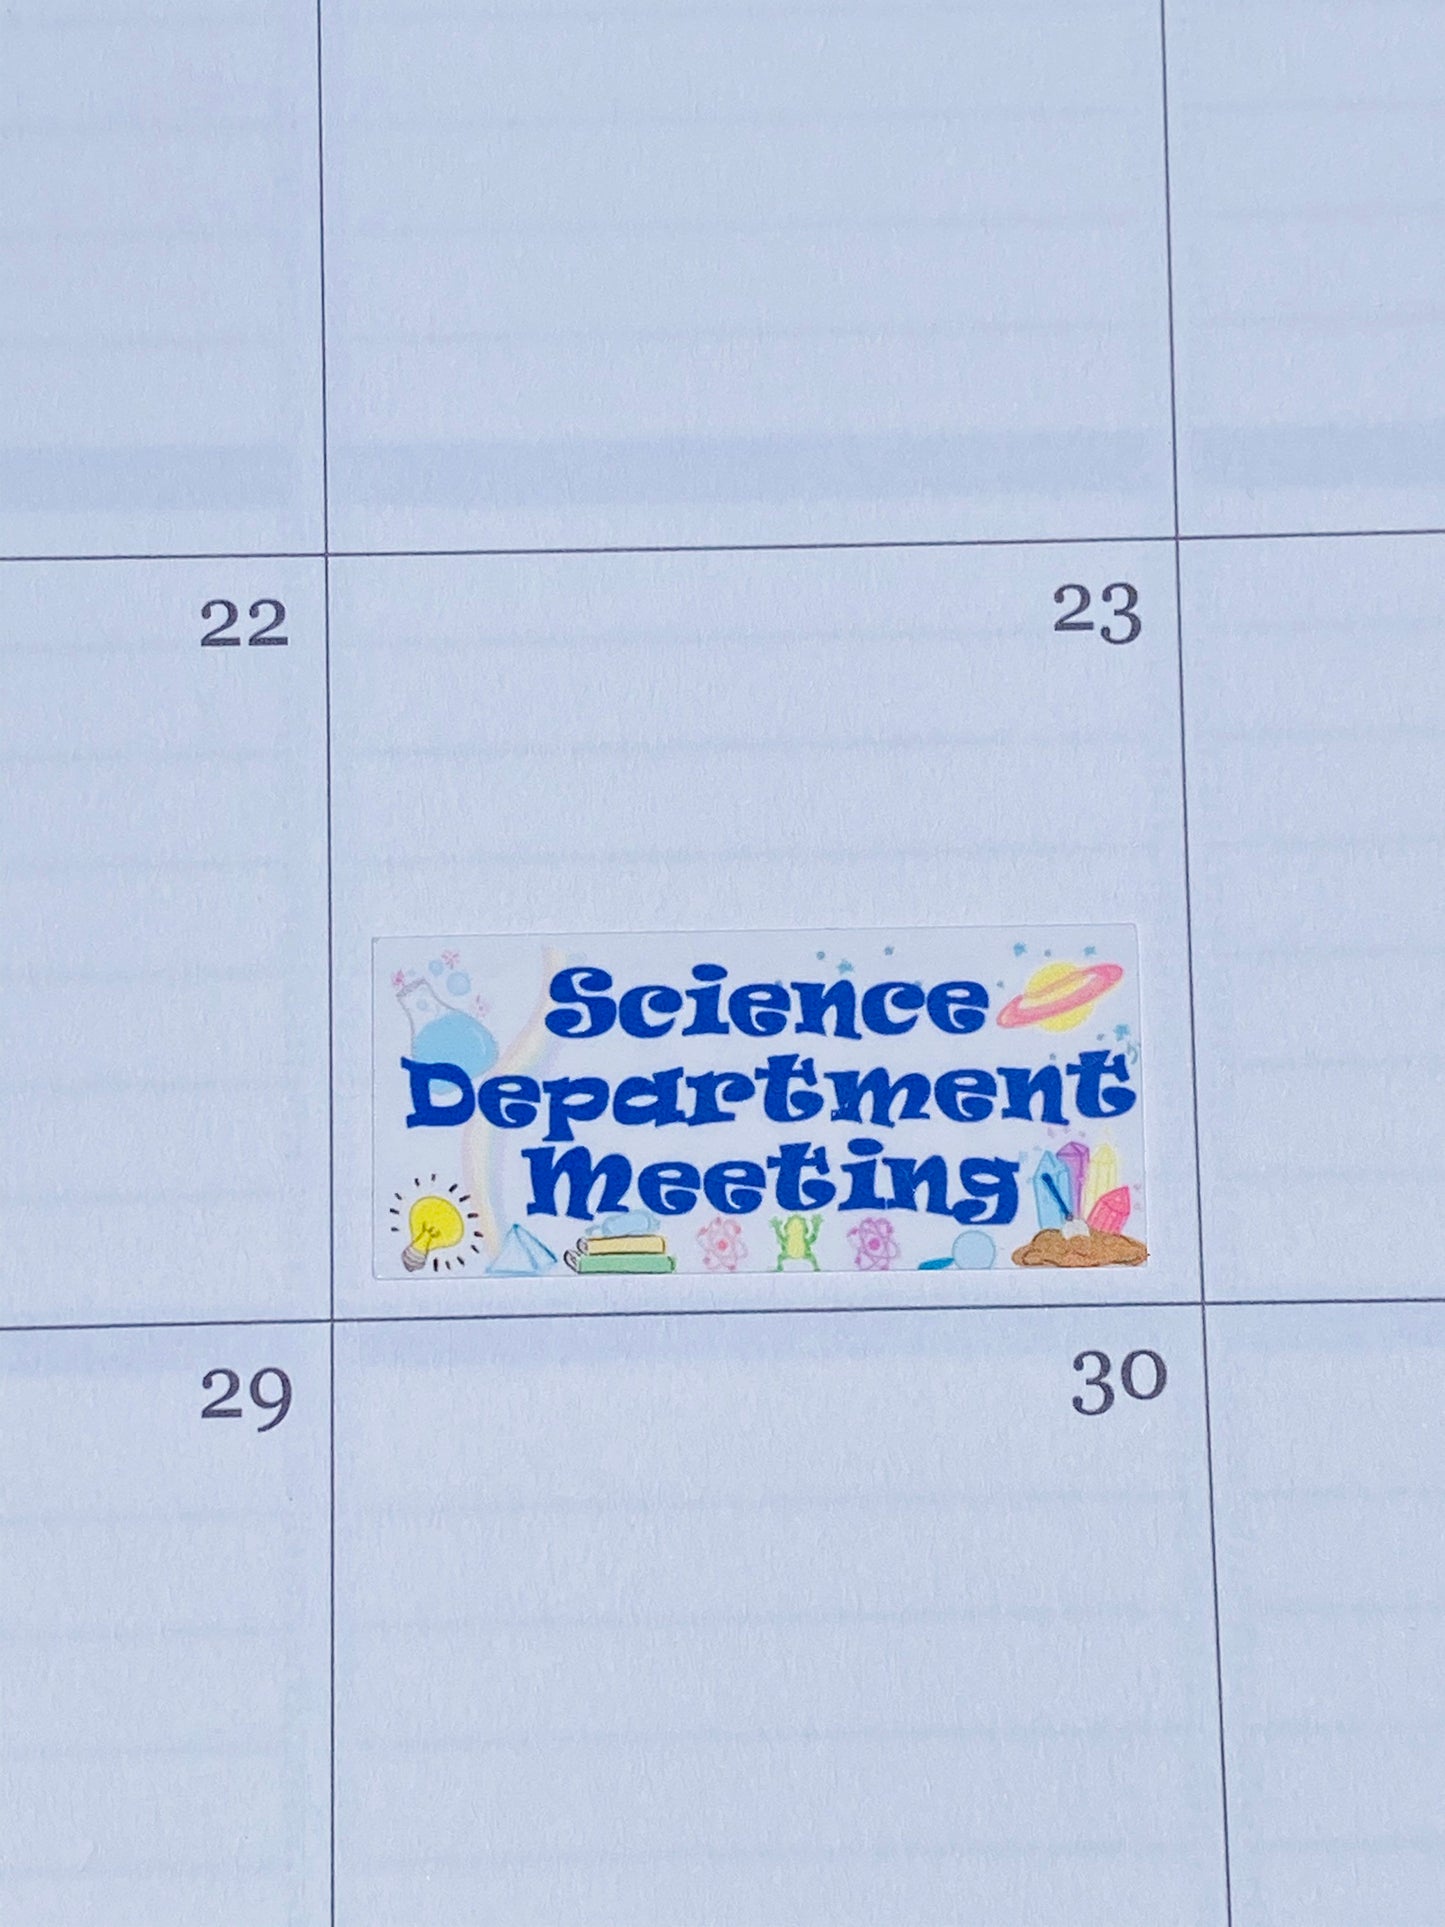 Science Teacher Meeting Planner Stickers